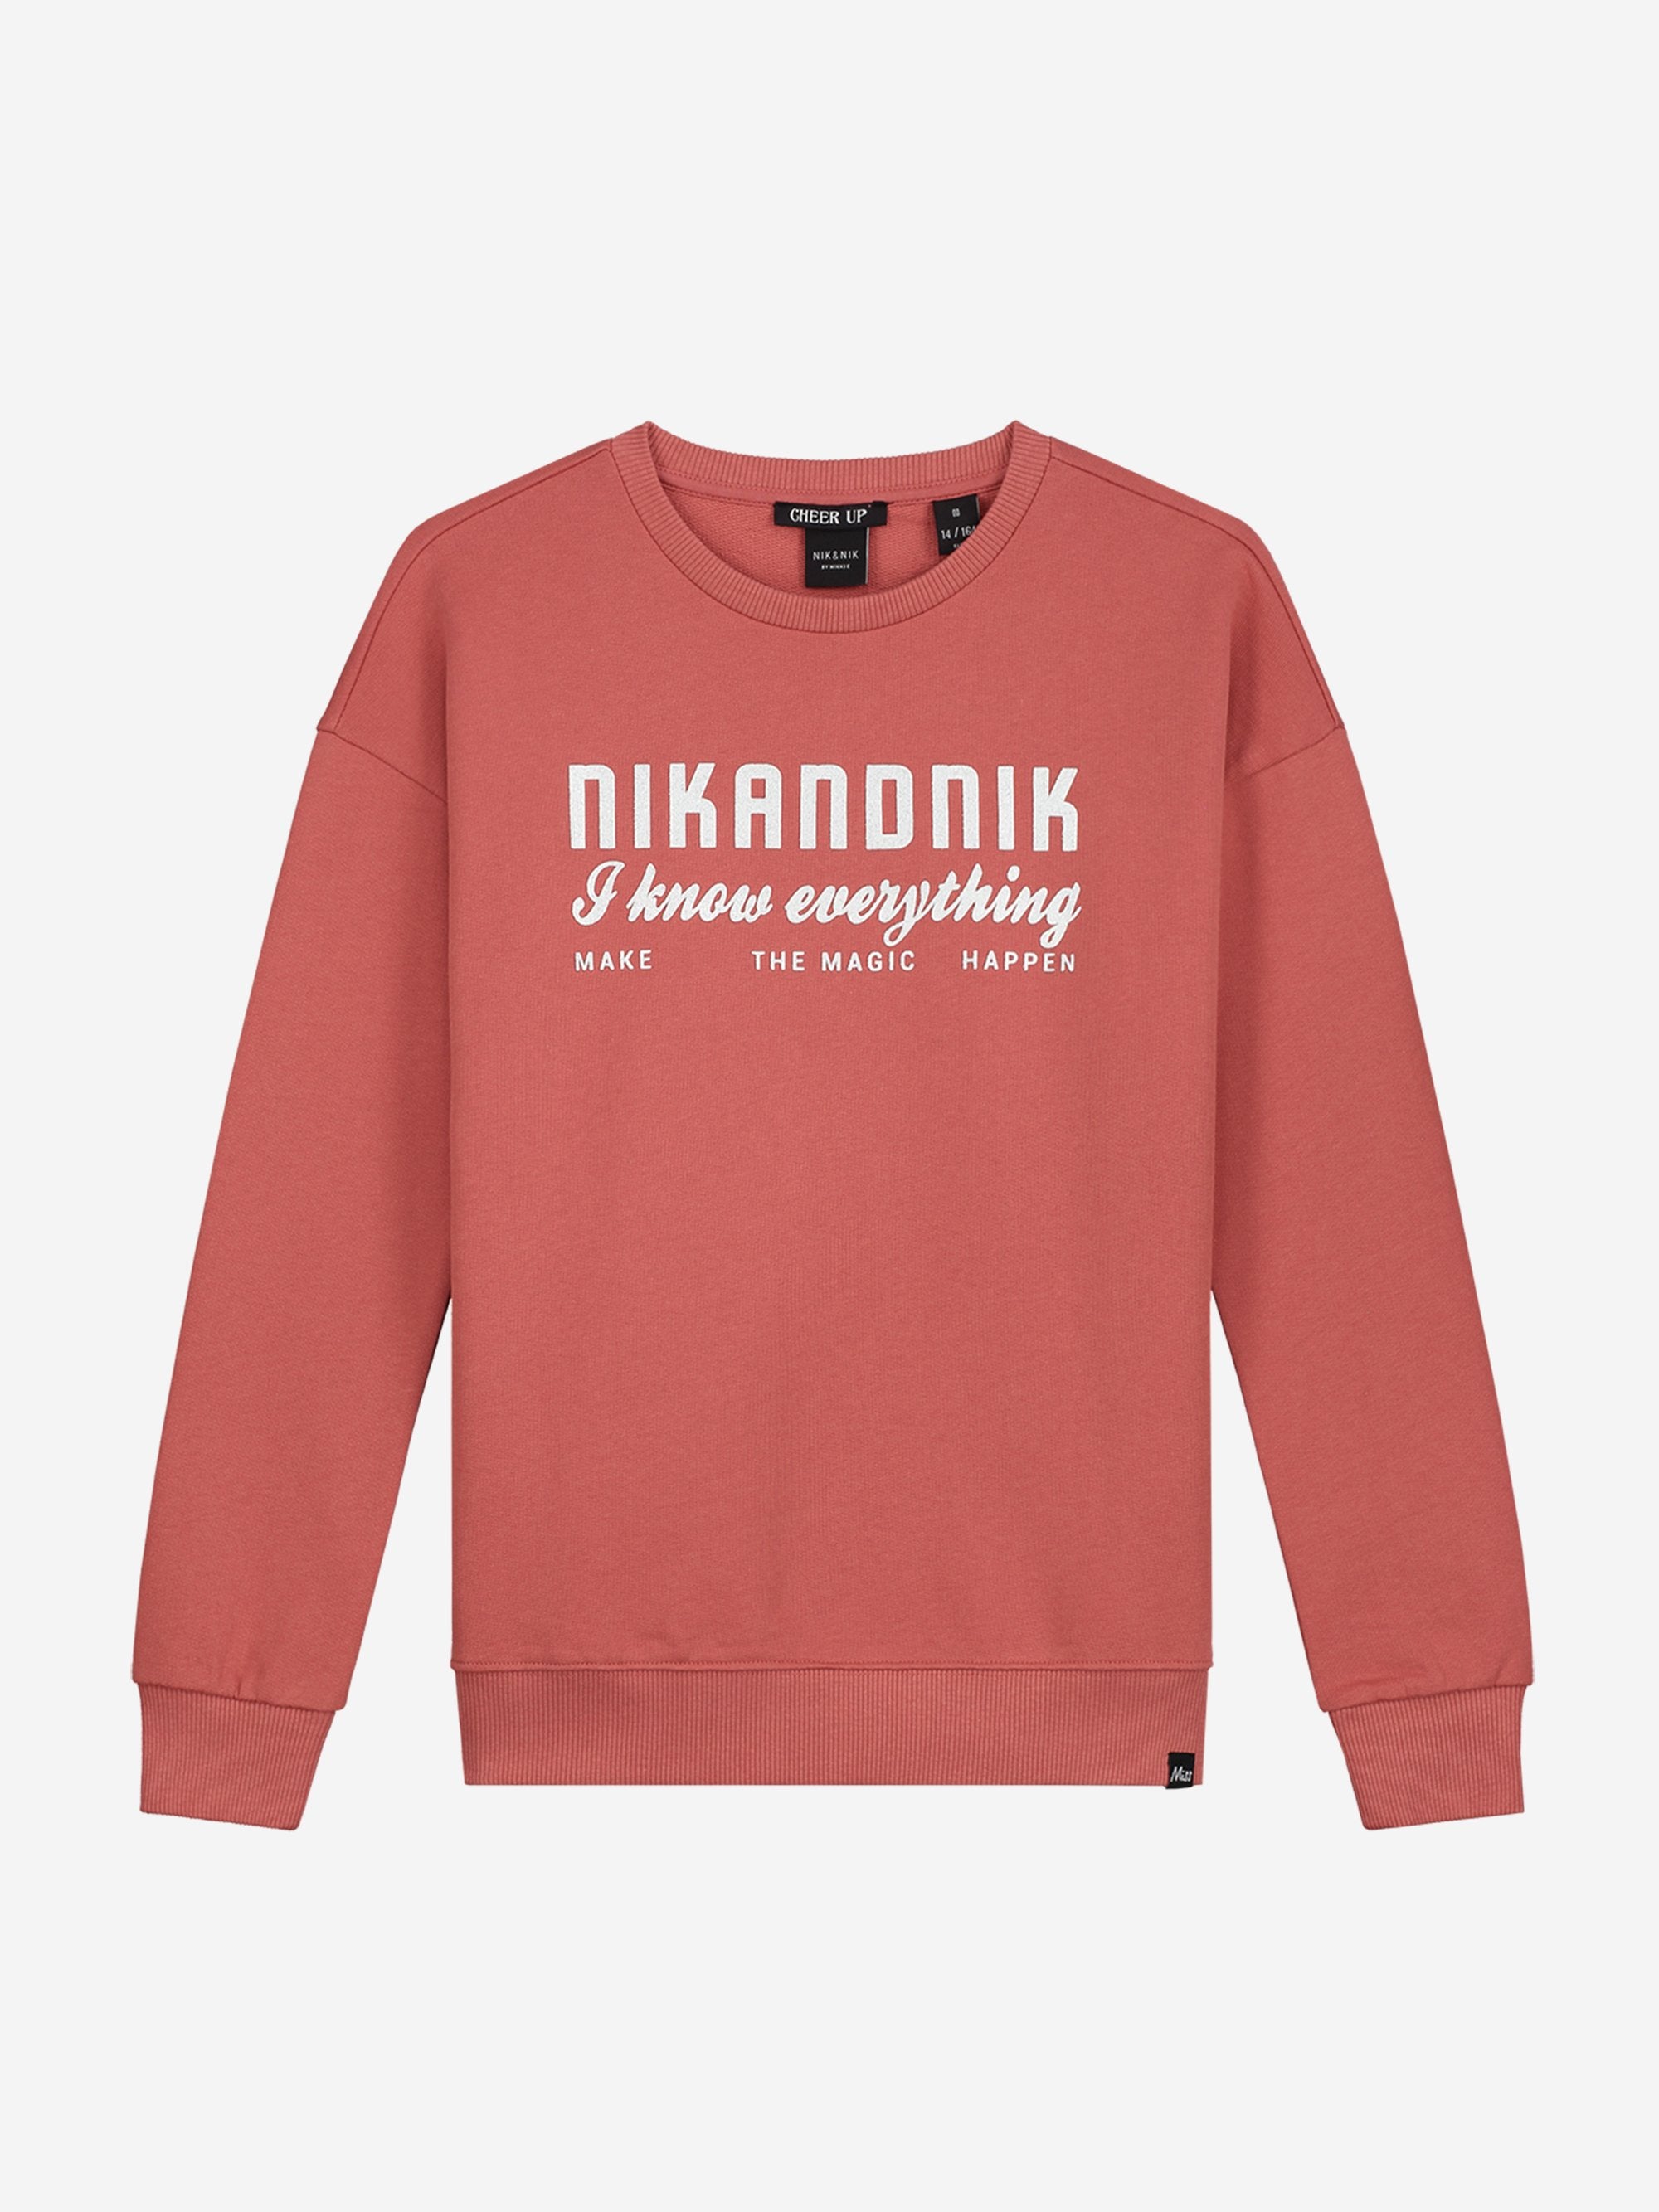 Meisjes Everything Sweater van Nik & Nik in de kleur Retro Pink in maat 176.